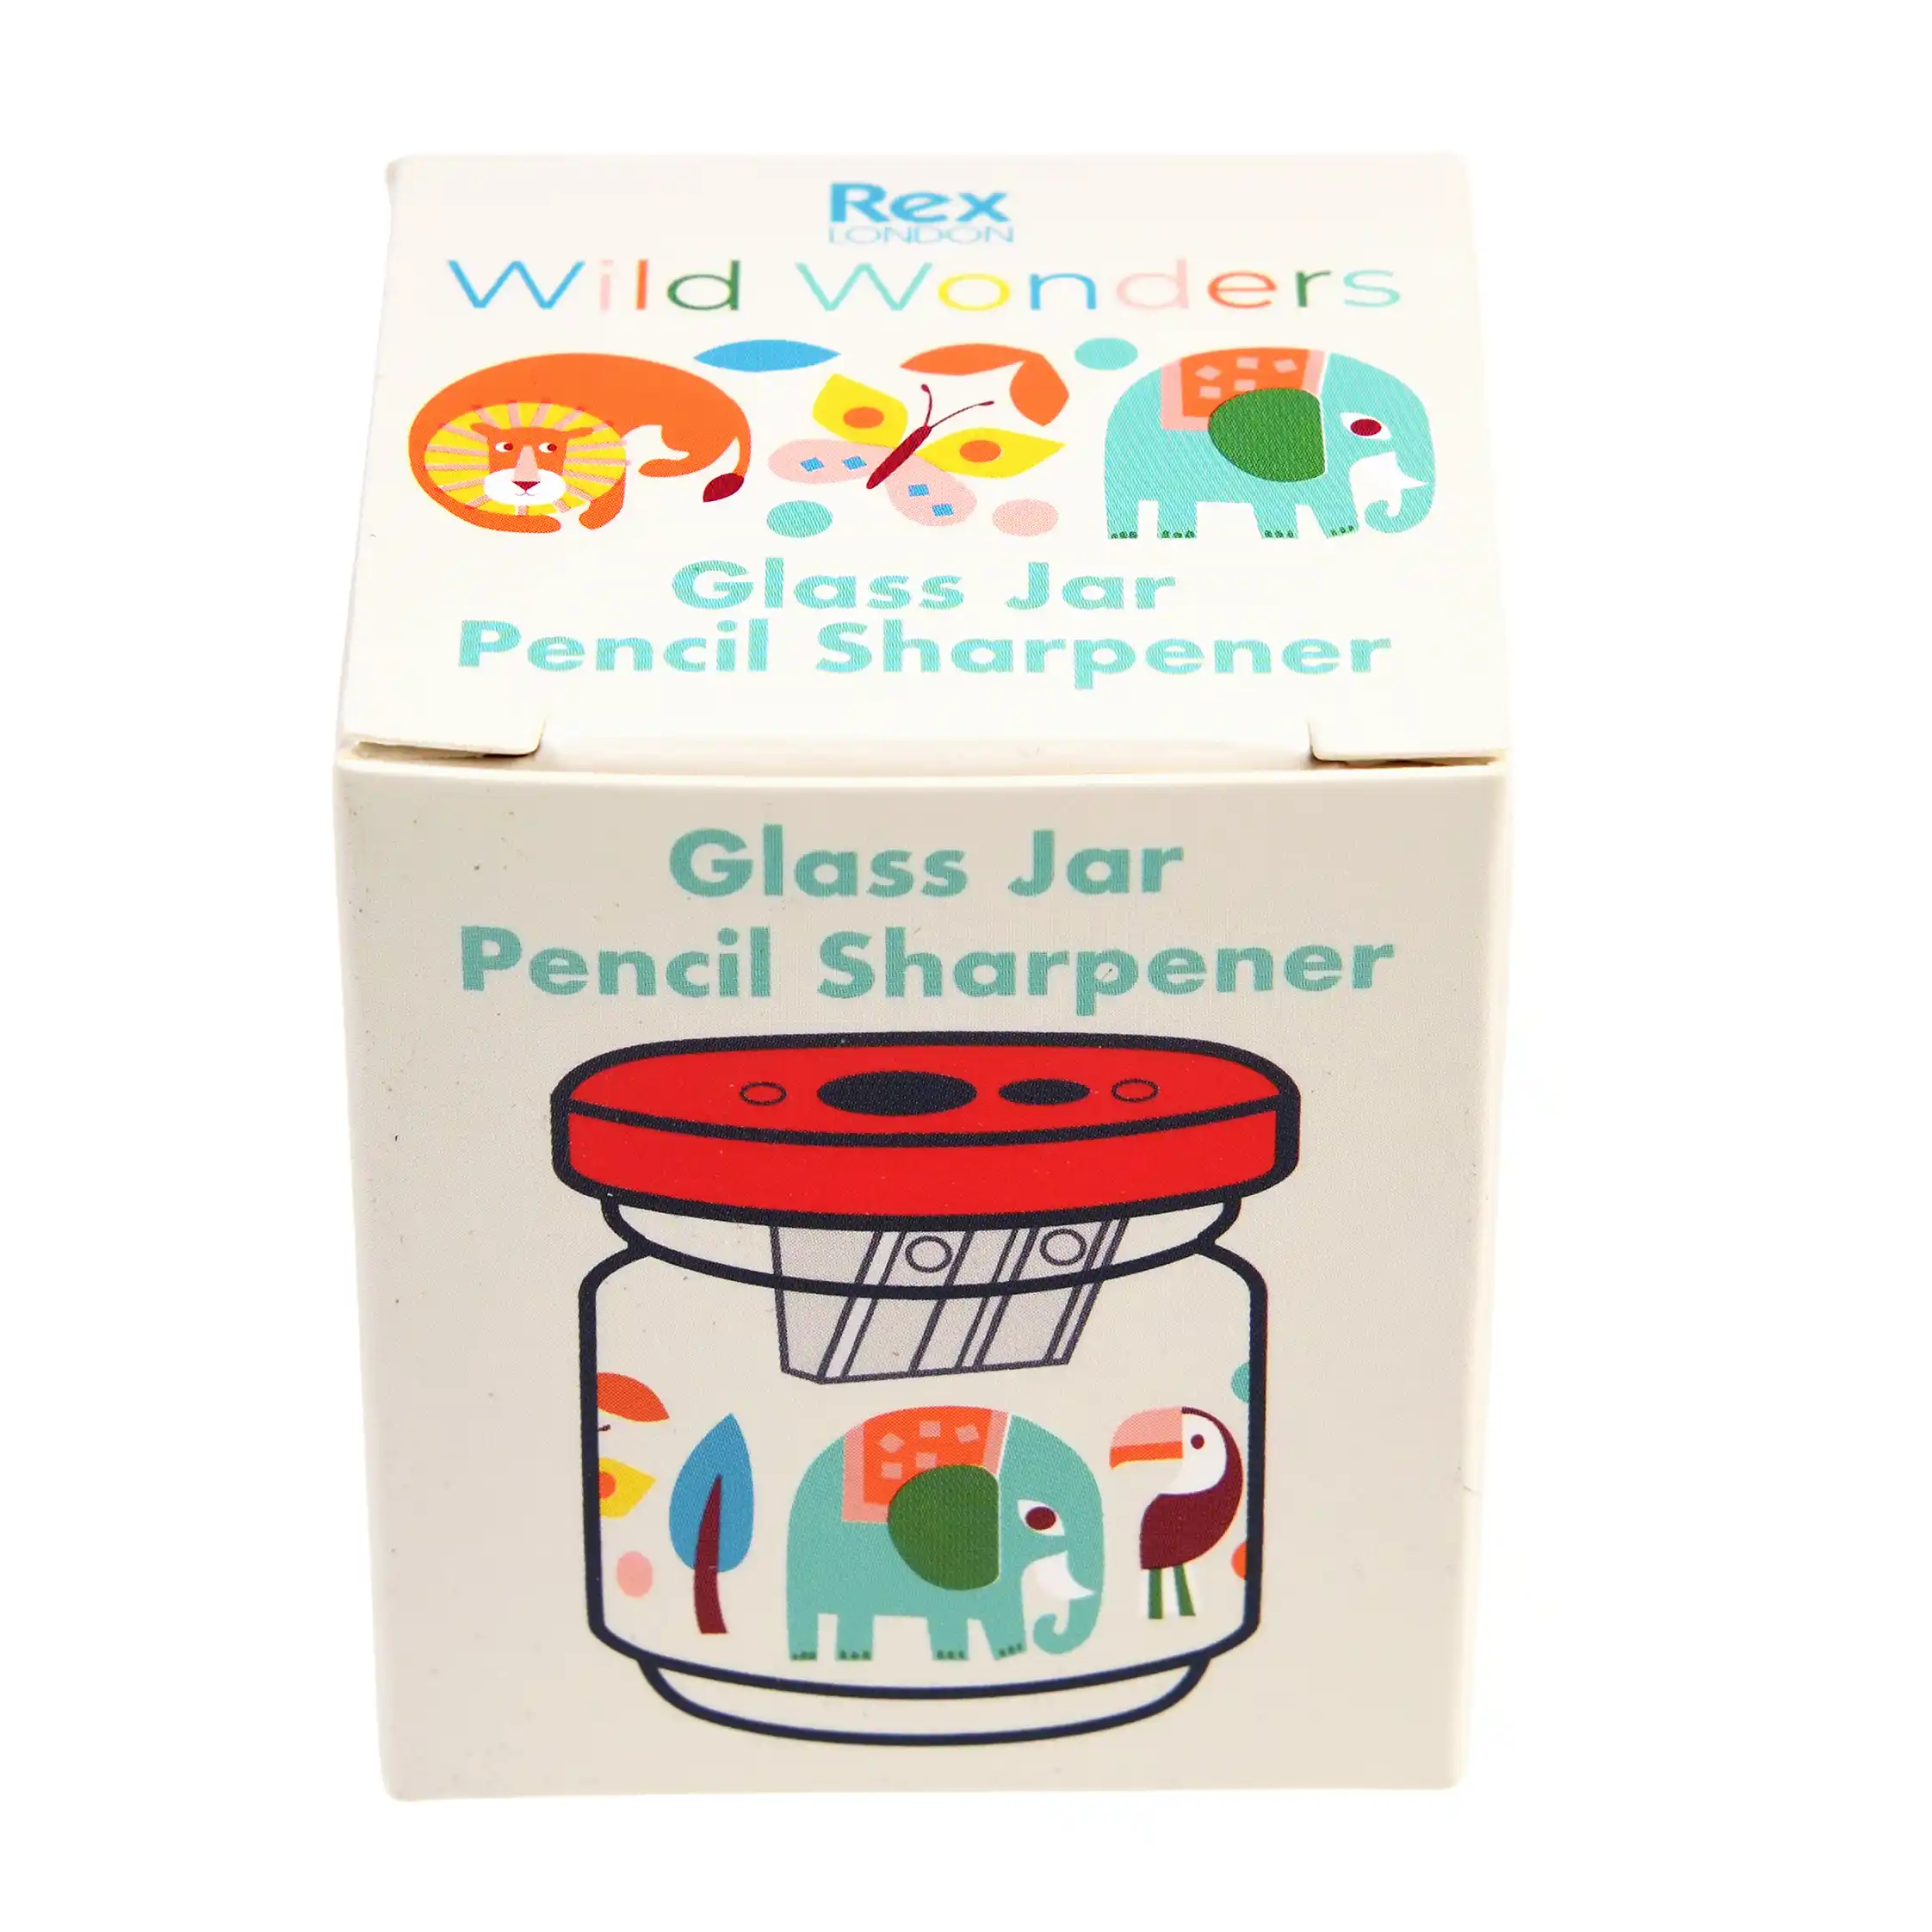 glass jar pencil sharpener - wild wonders